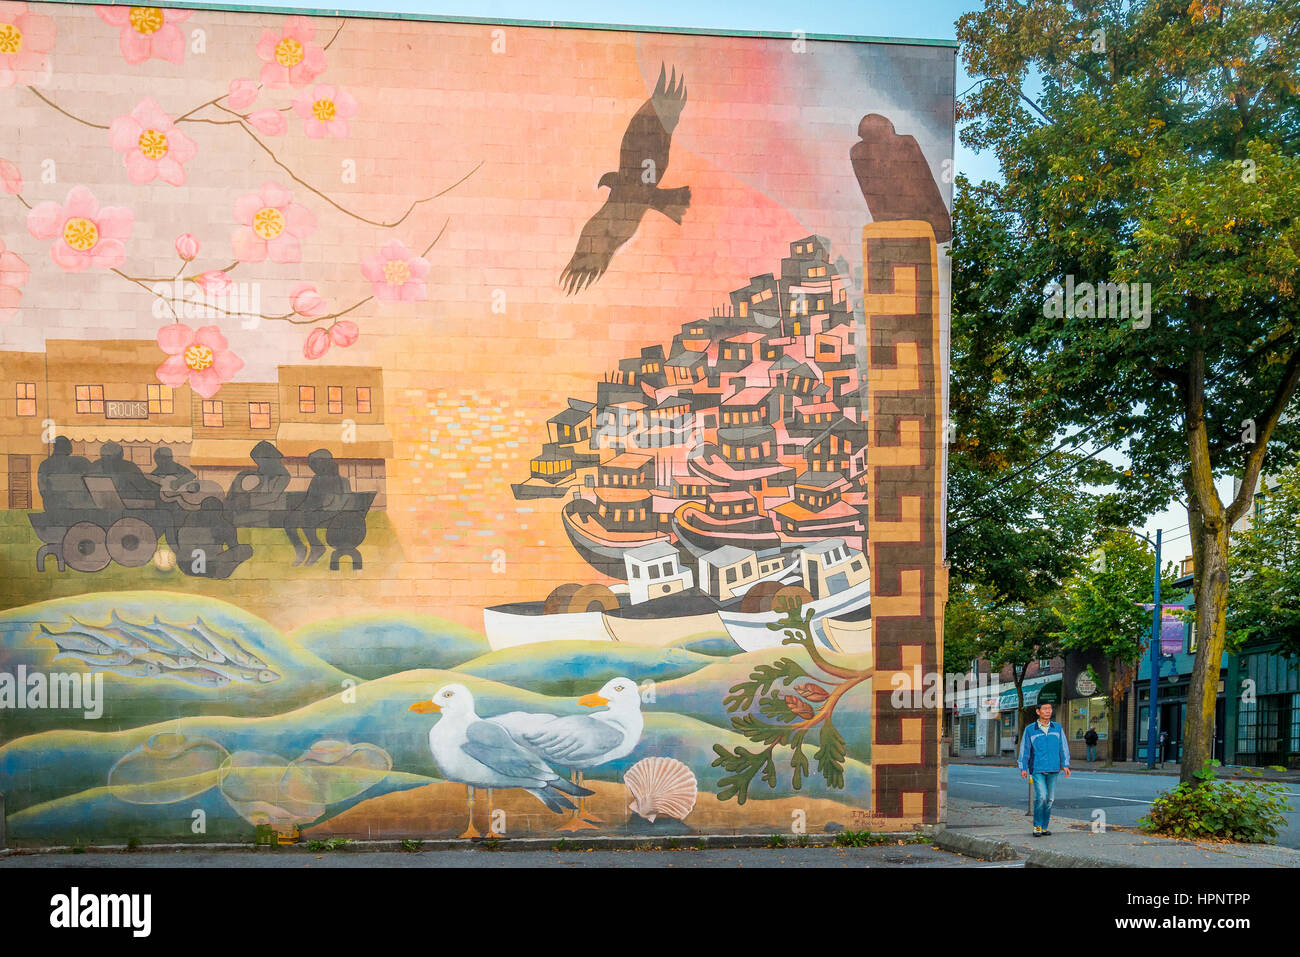 Wandbild mit dem Titel "Gemeinschaft feiern", Powell Street, DTES, Vancouver, Britisch-Kolumbien, Kanada Stockfoto